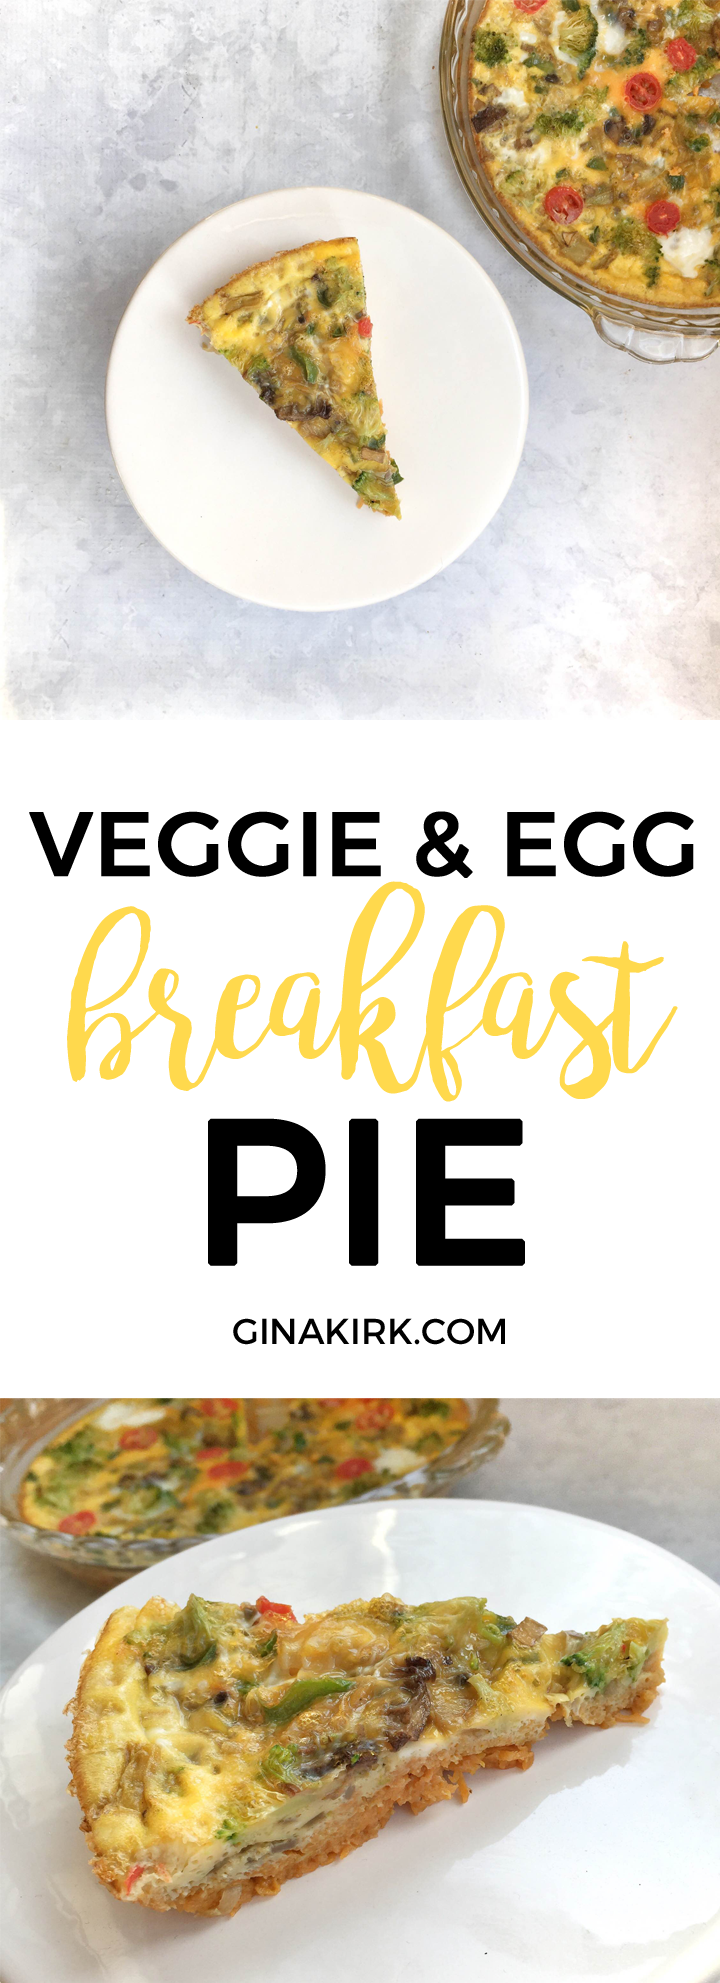 Egg & veggie breakfast pie | Make ahead breakfast ideas | Healthy high protein breakfast recipe | GinaKirk.com @ginaekirk